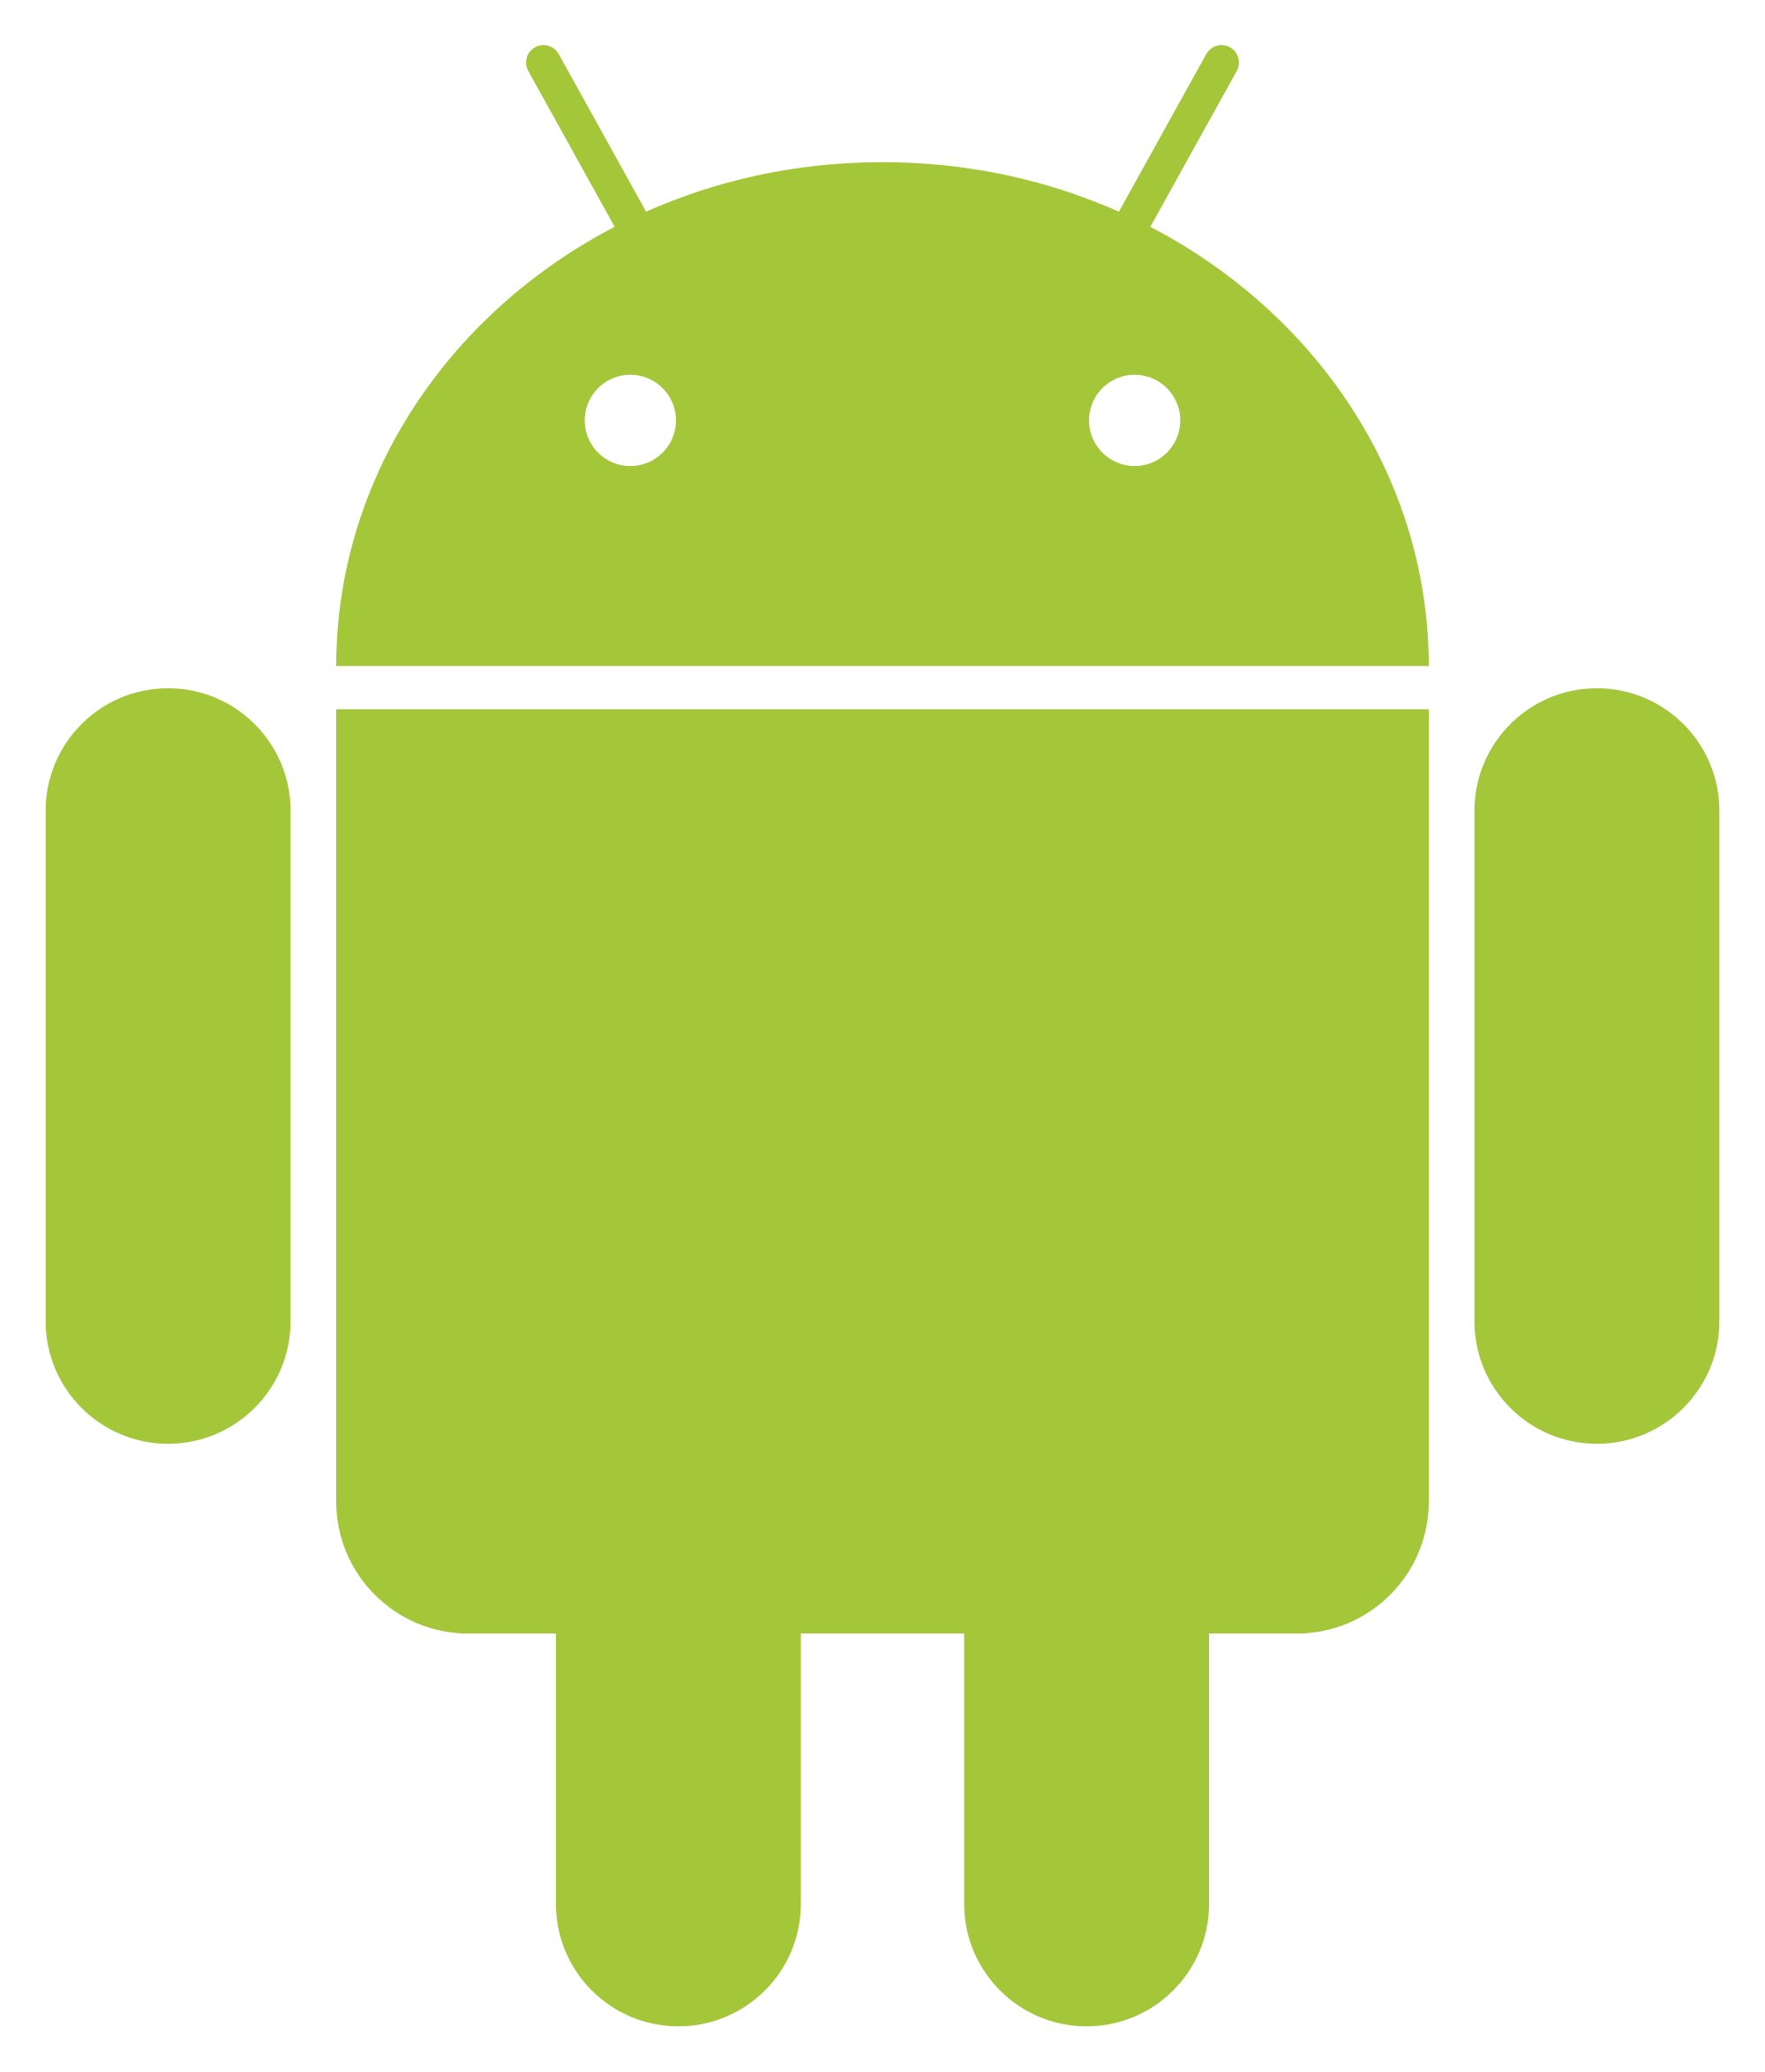 Зеленый значок андроида. Андроид. Символ андроид. Значок Android. Логотип андроид вектор.